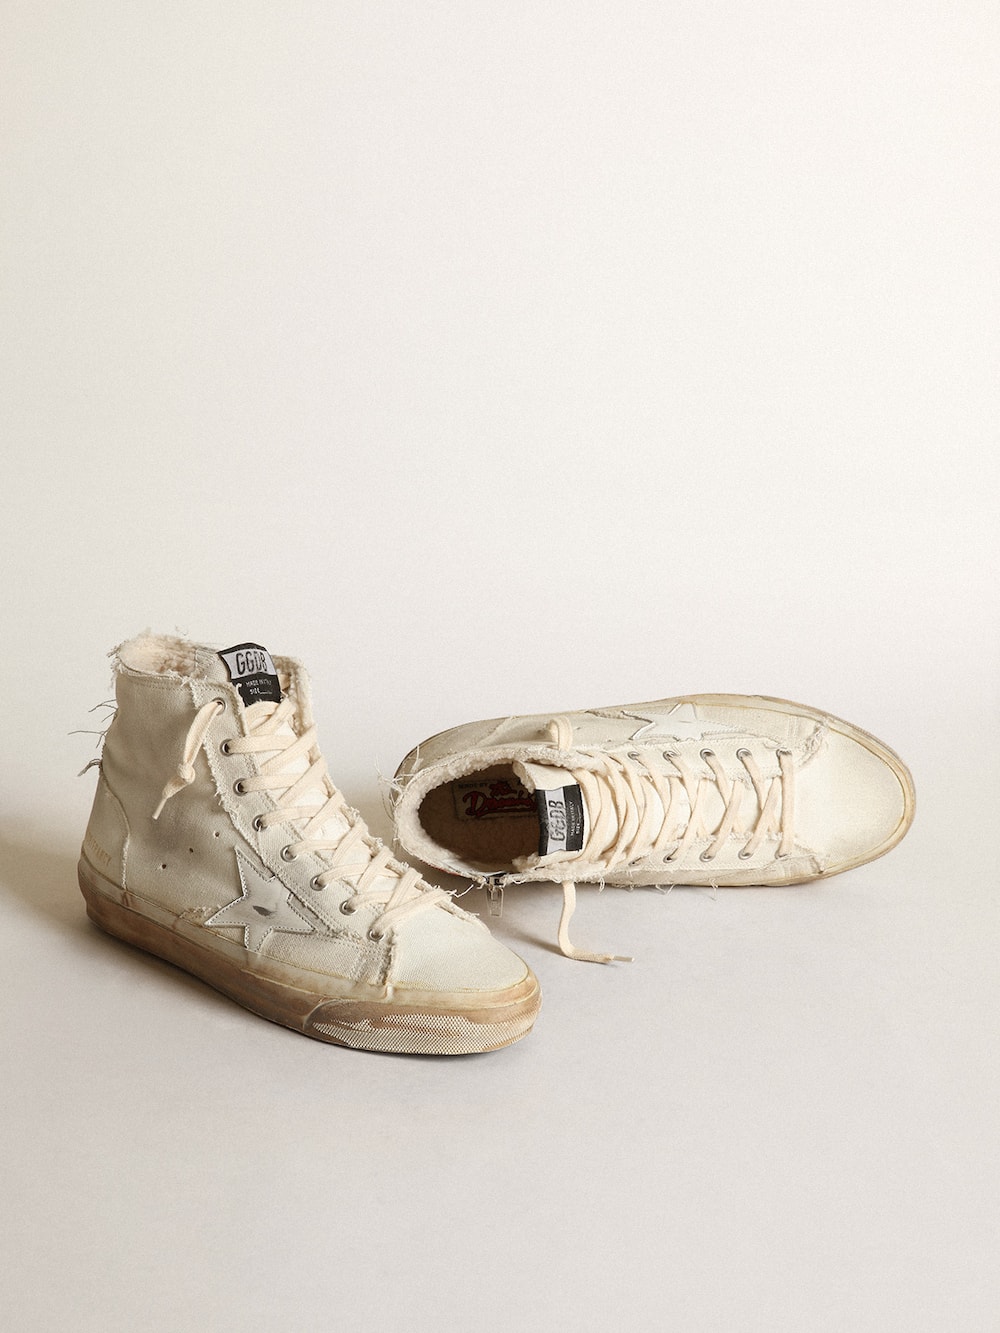 Golden Goose - Sneakers Francy en toile ivoire avec étoile en cuir blanc in 